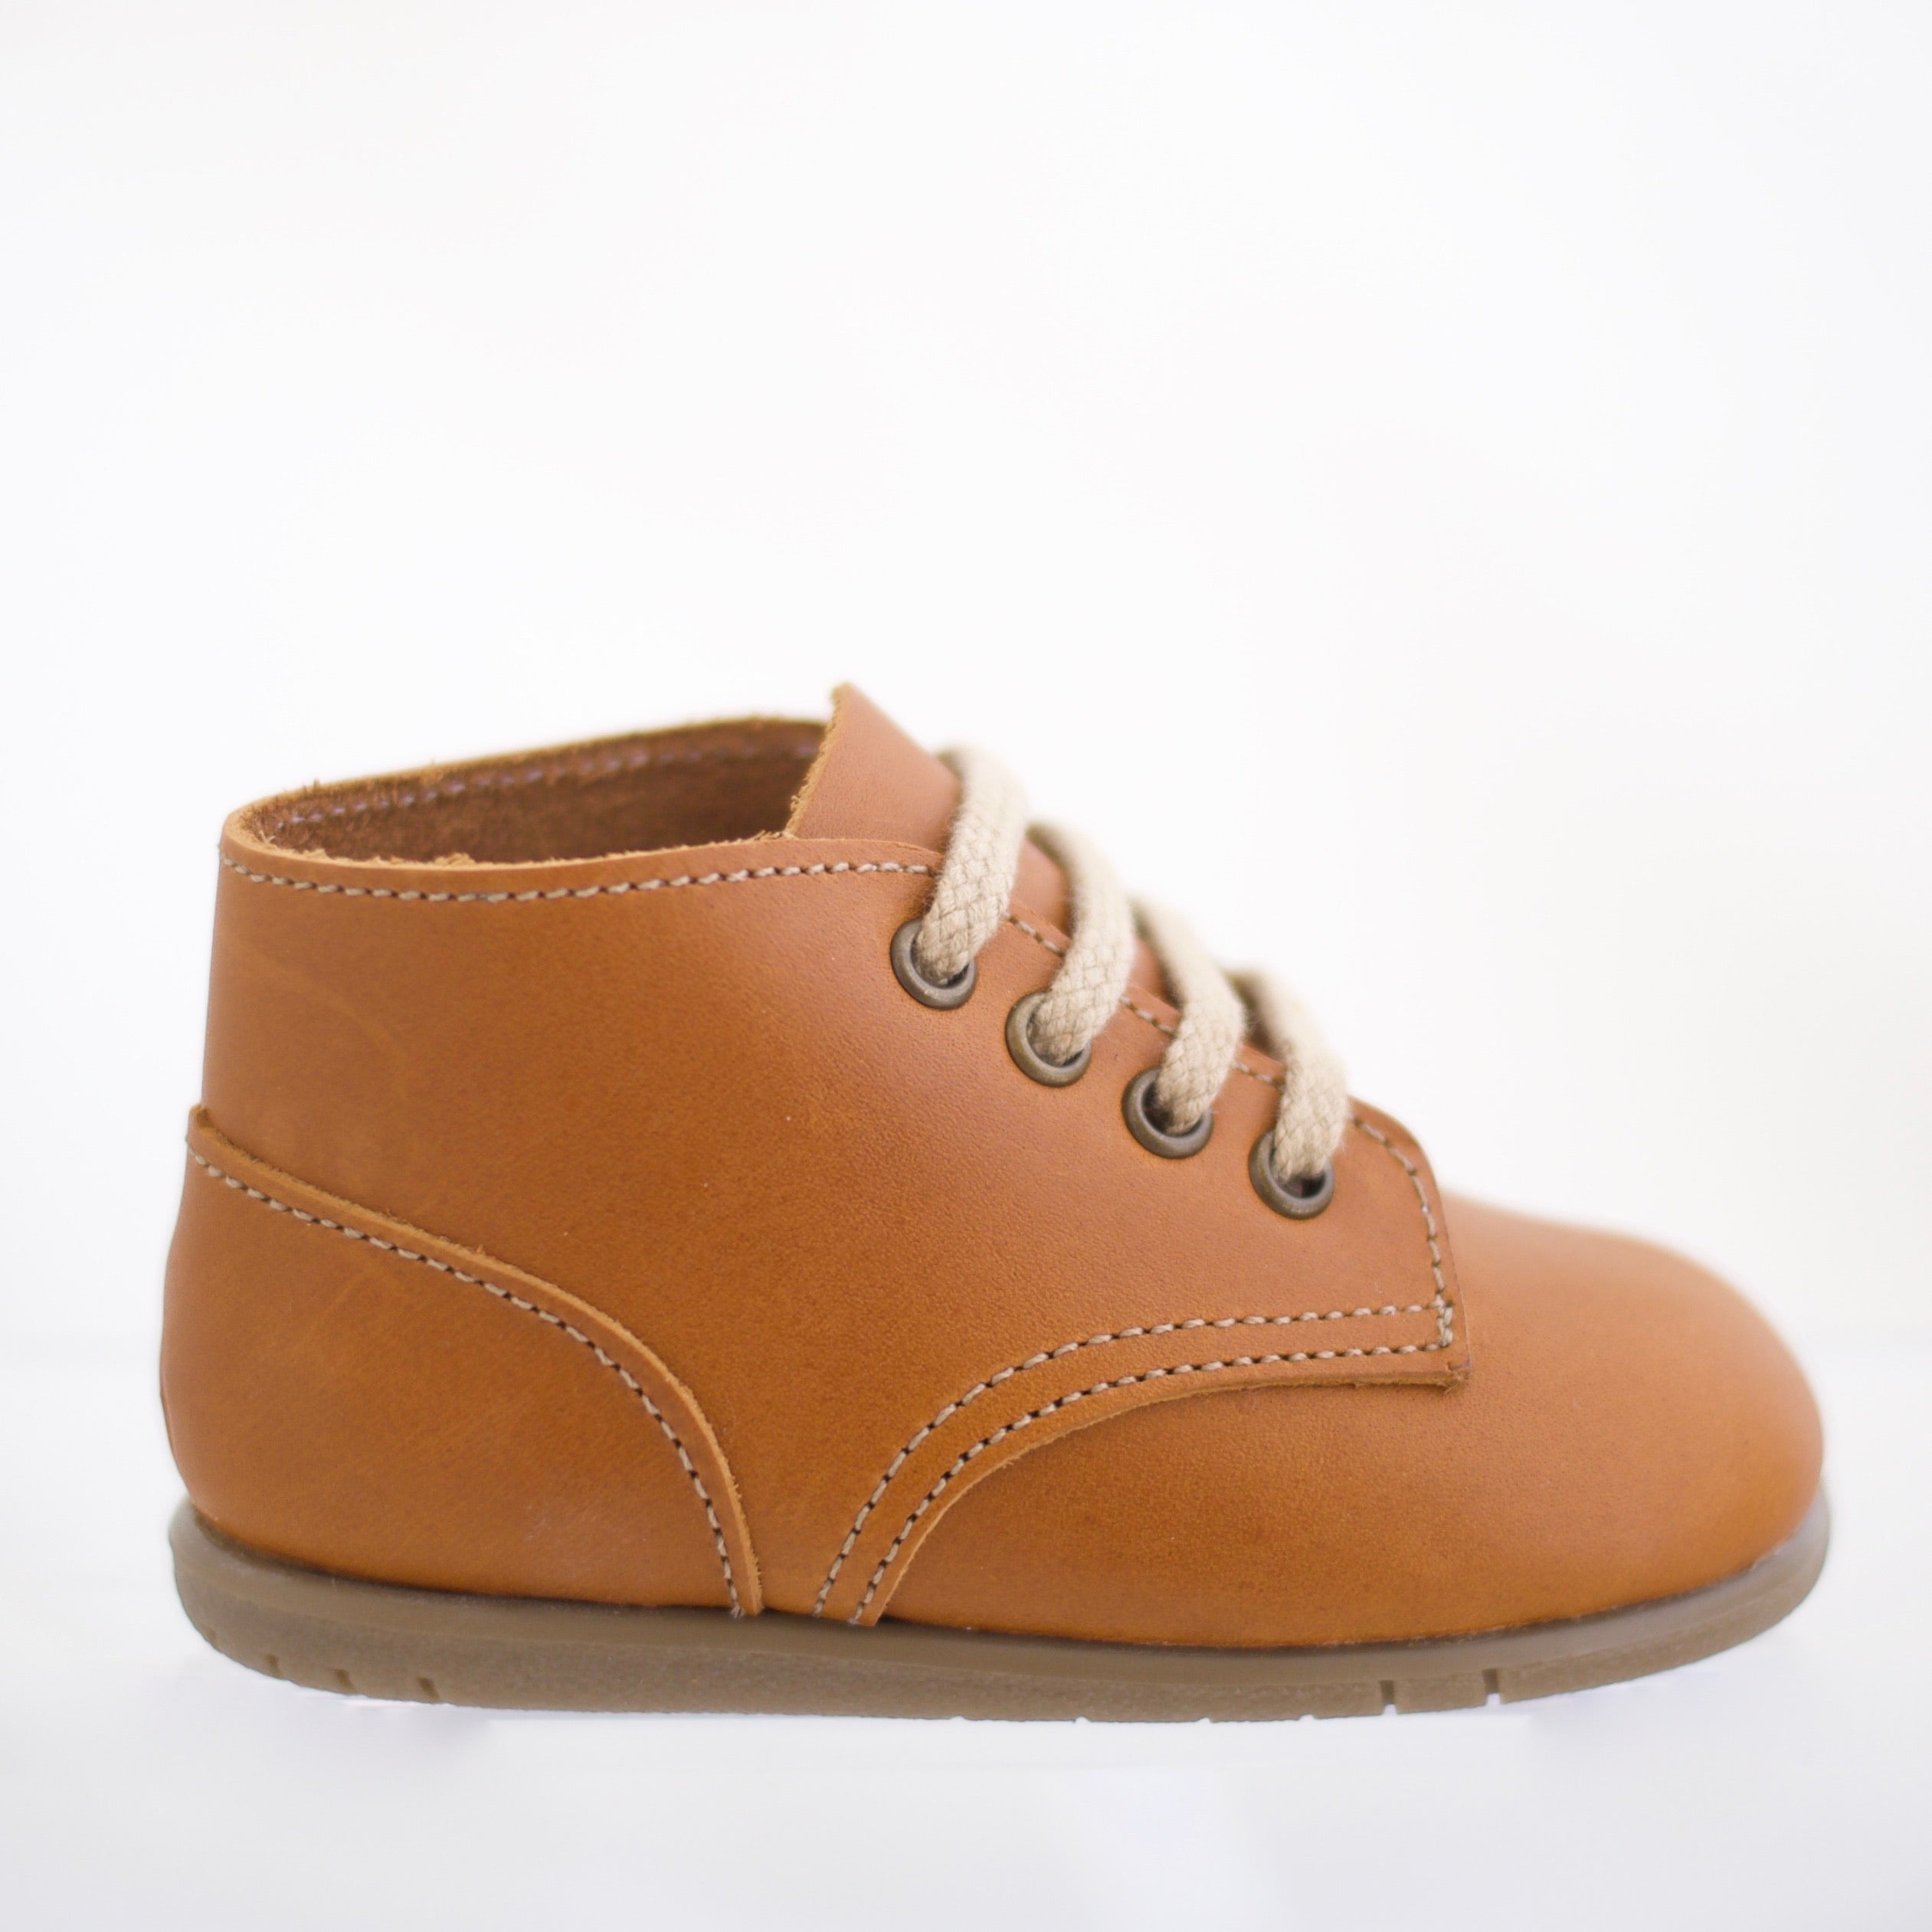 zimmerman shoes first walker in warm brown